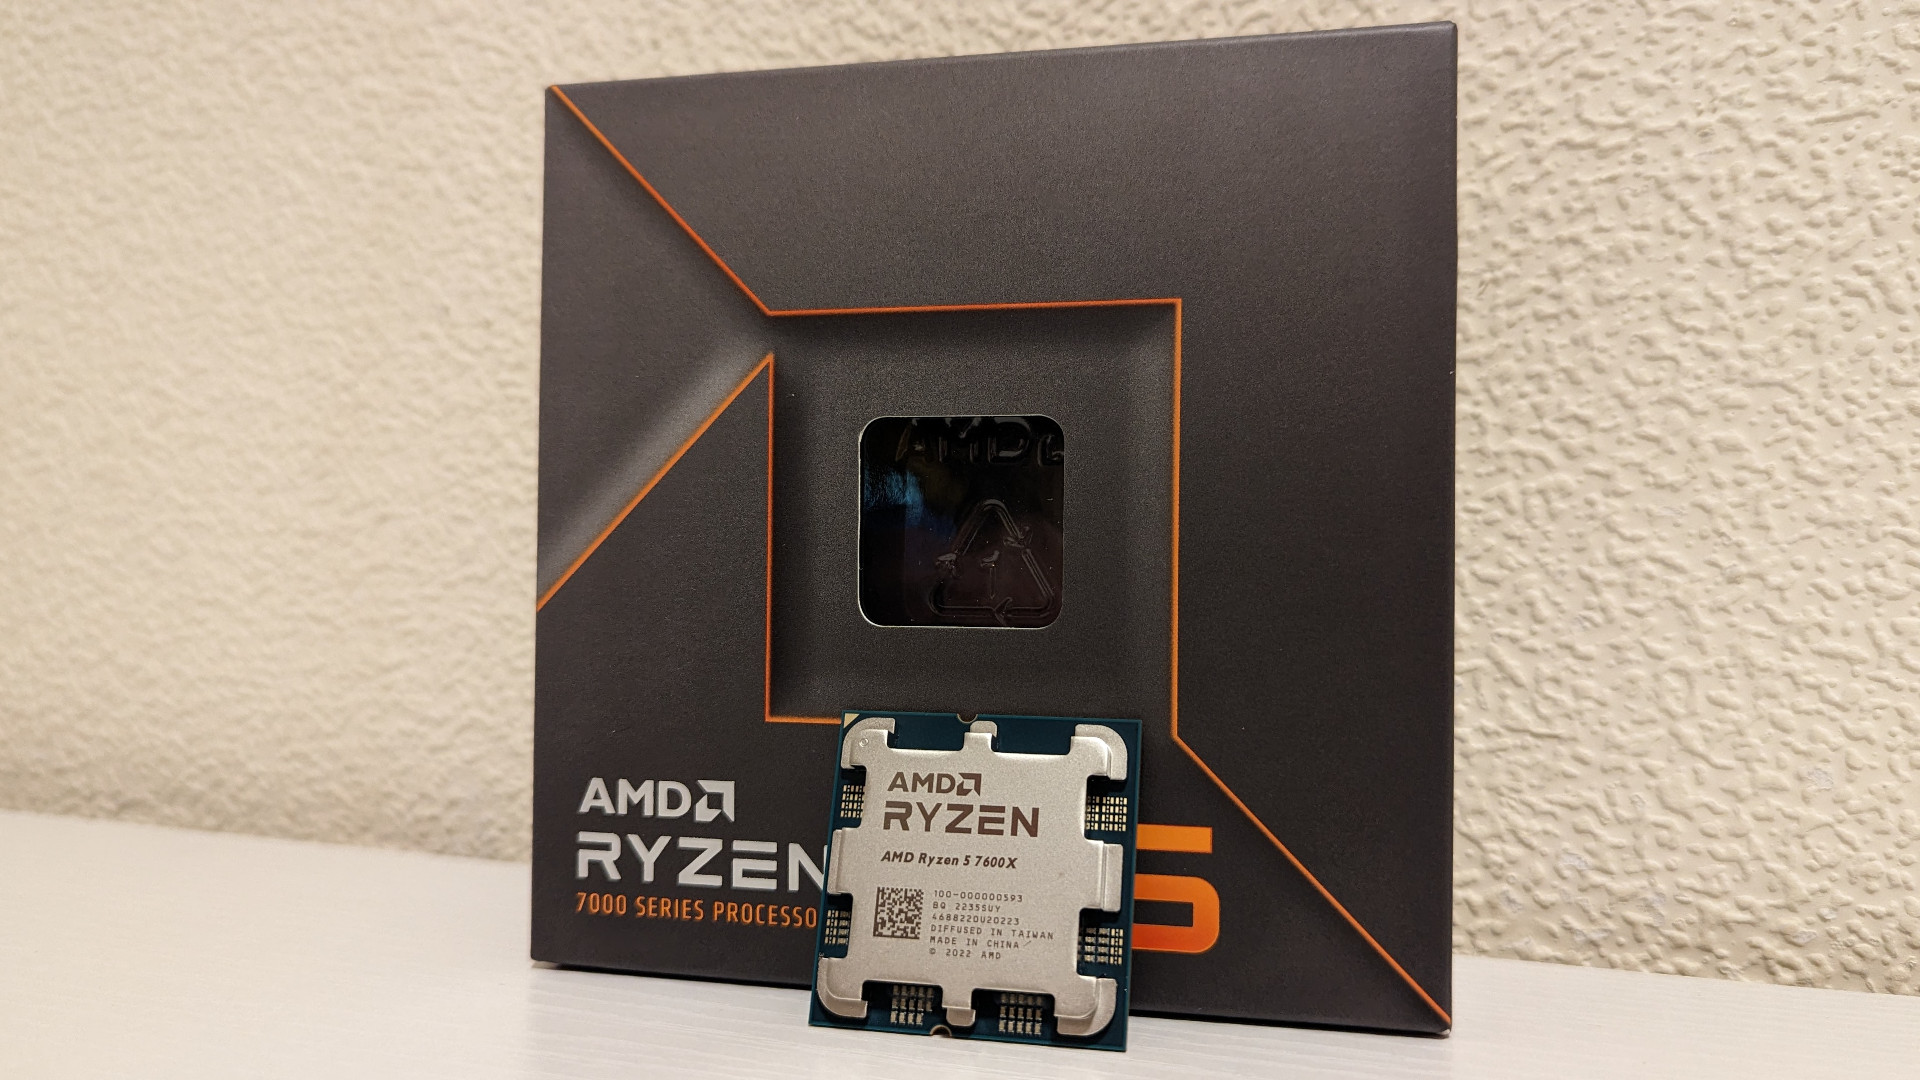 AMD Ryzen 5 5600X review: The best mid-range desktop processor for